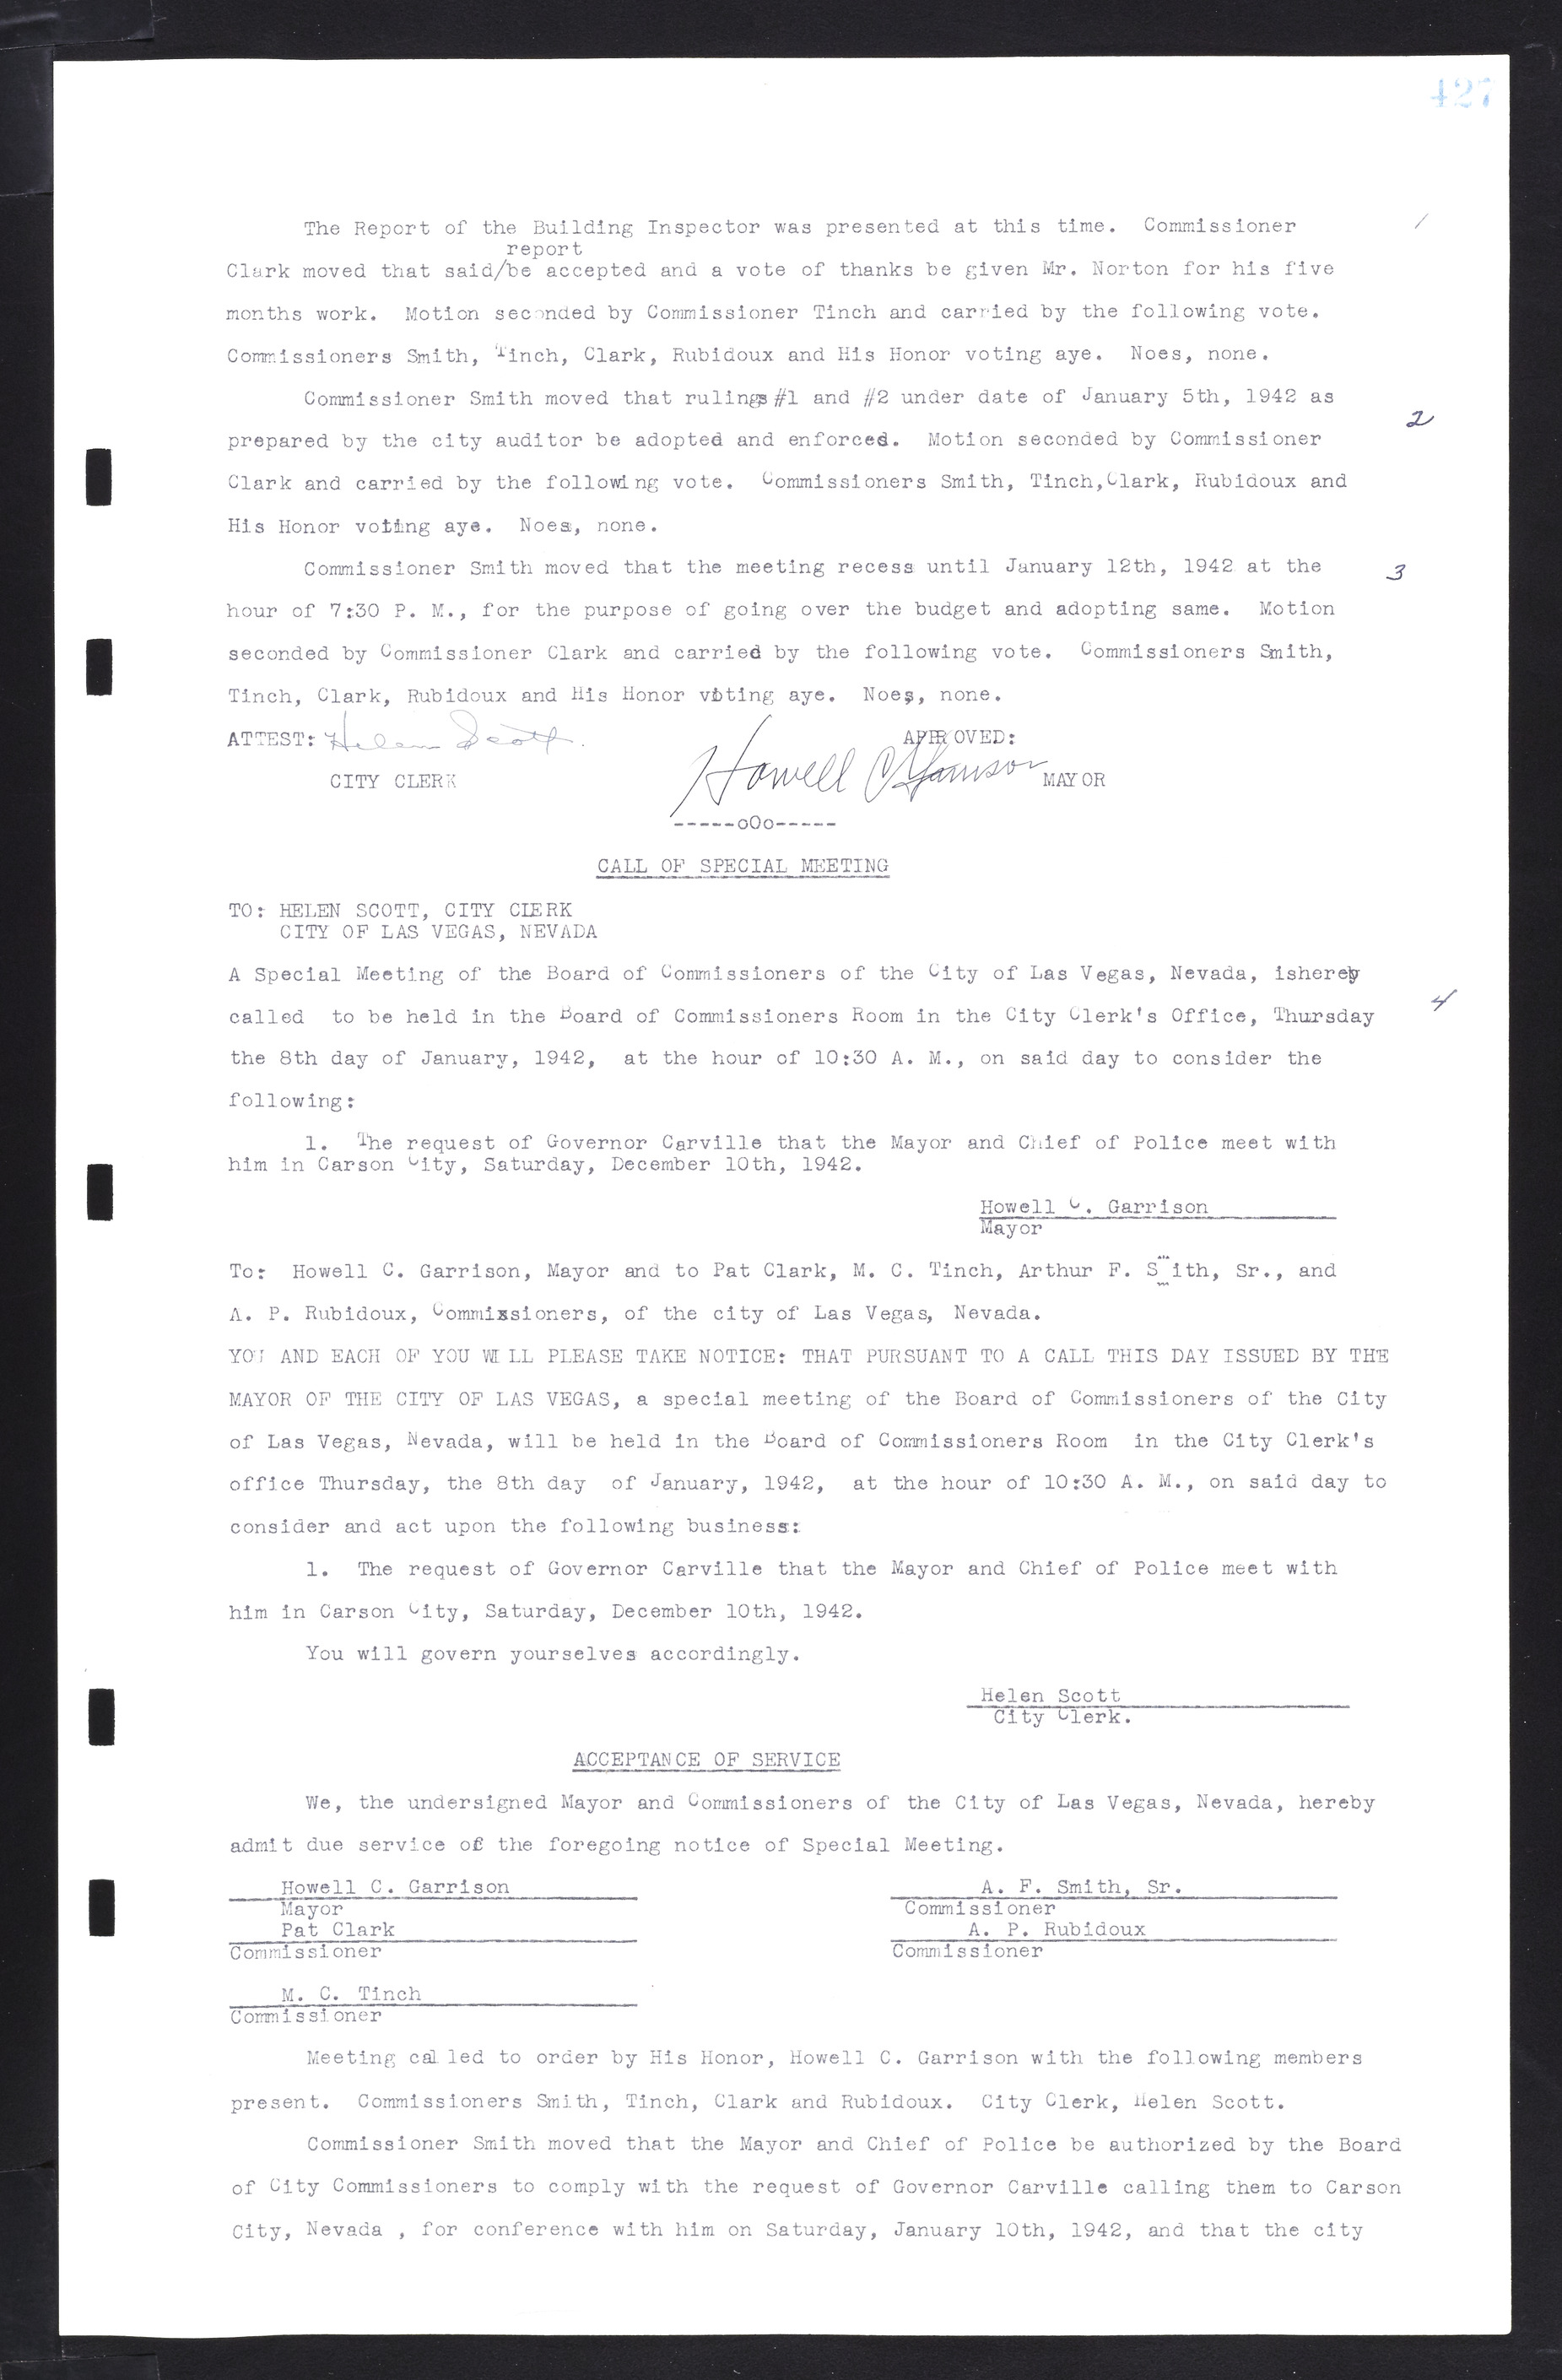 Las Vegas City Commission Minutes, February 17, 1937 to August 4, 1942, lvc000004-455